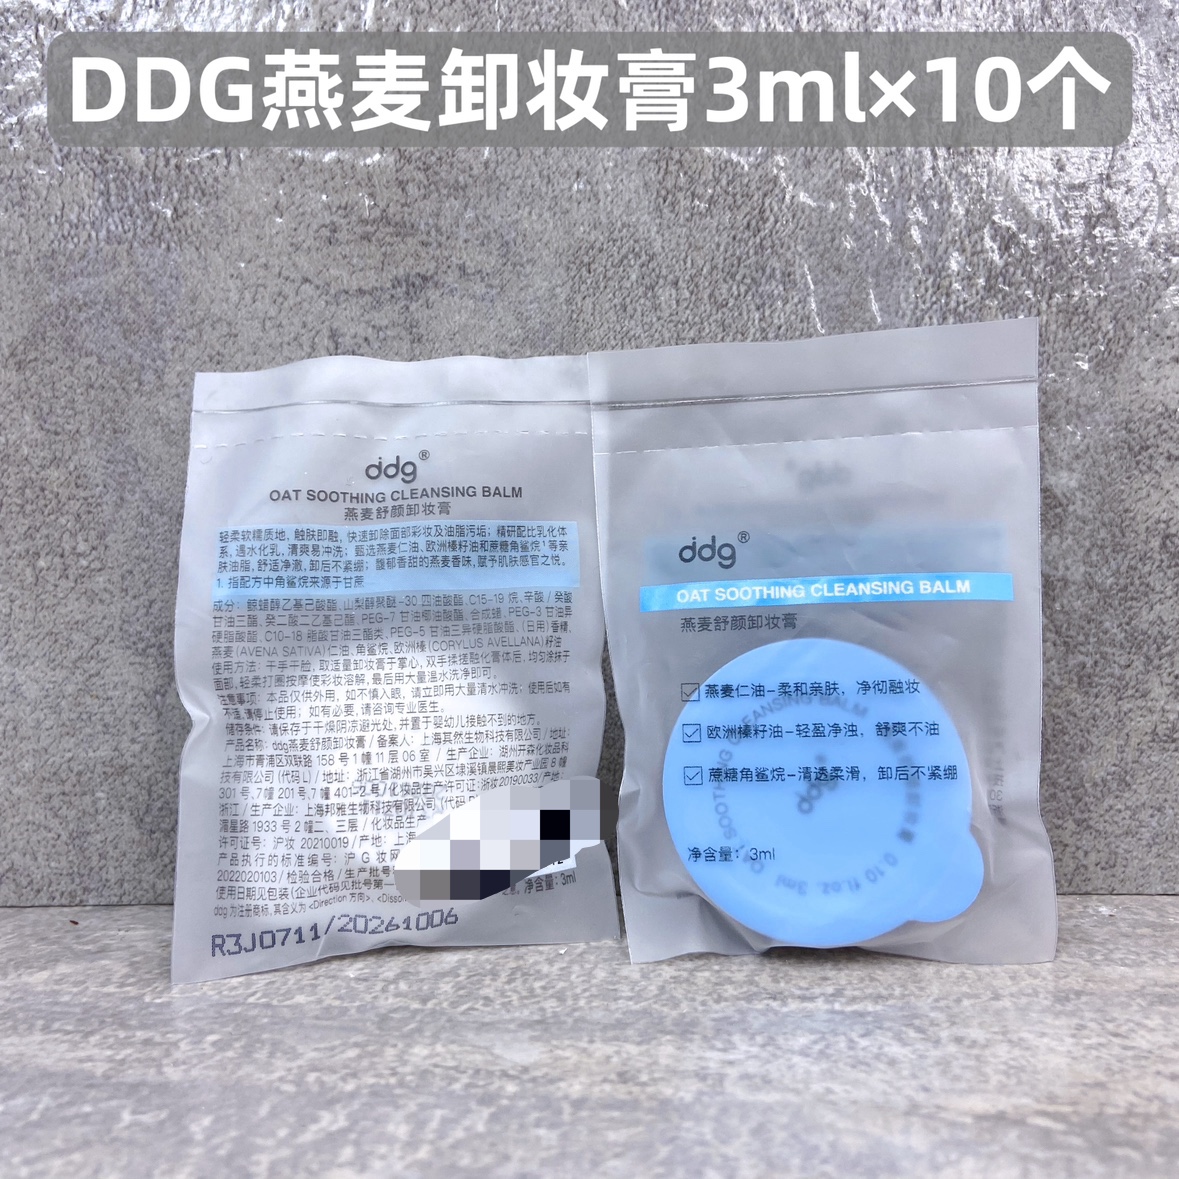 ddg511燕麦舒颜卸妆膏小样3ml×10颗温和清洁卸妆易乳化洗卸合一 - 图1